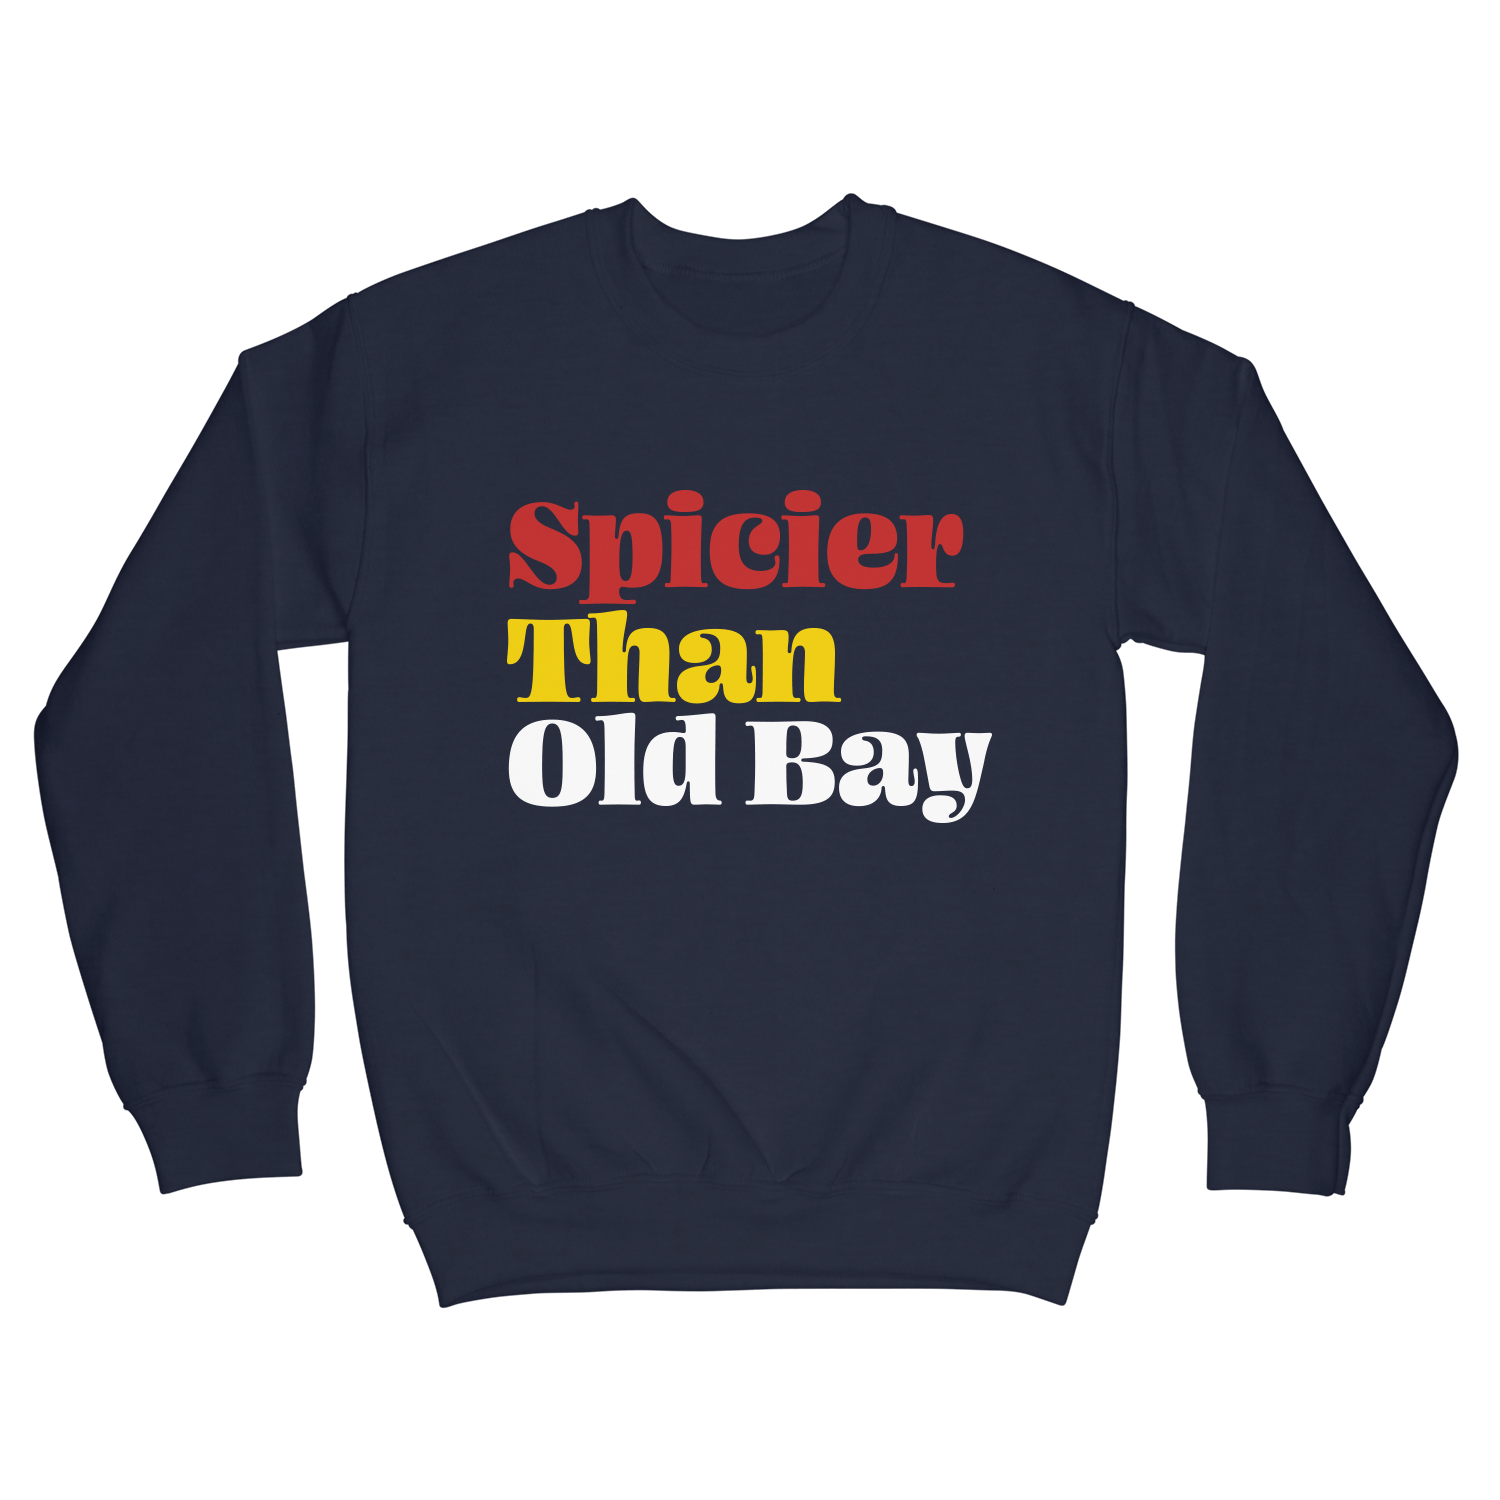 Spicier Than Old Bay (Navy) / Crew Sweatshirt - Route One Apparel